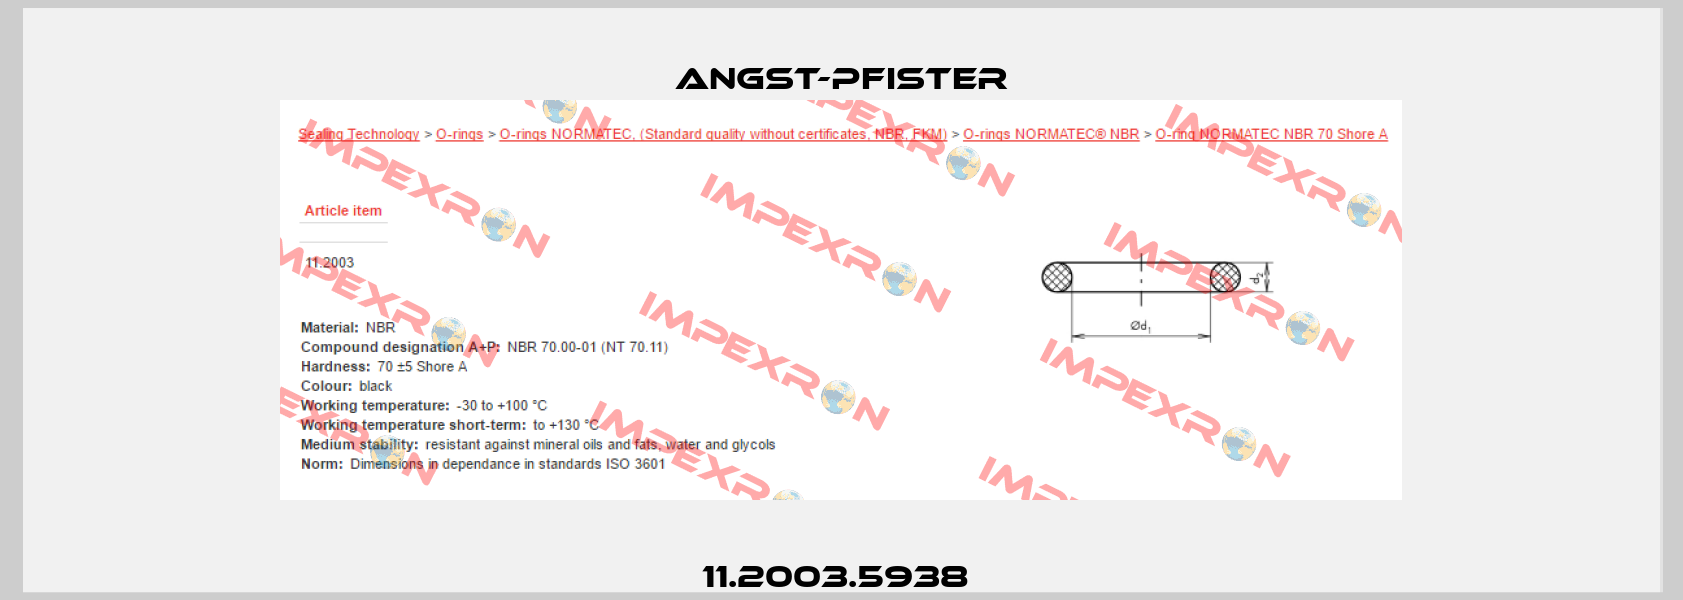 11.2003.5938  Angst-Pfister